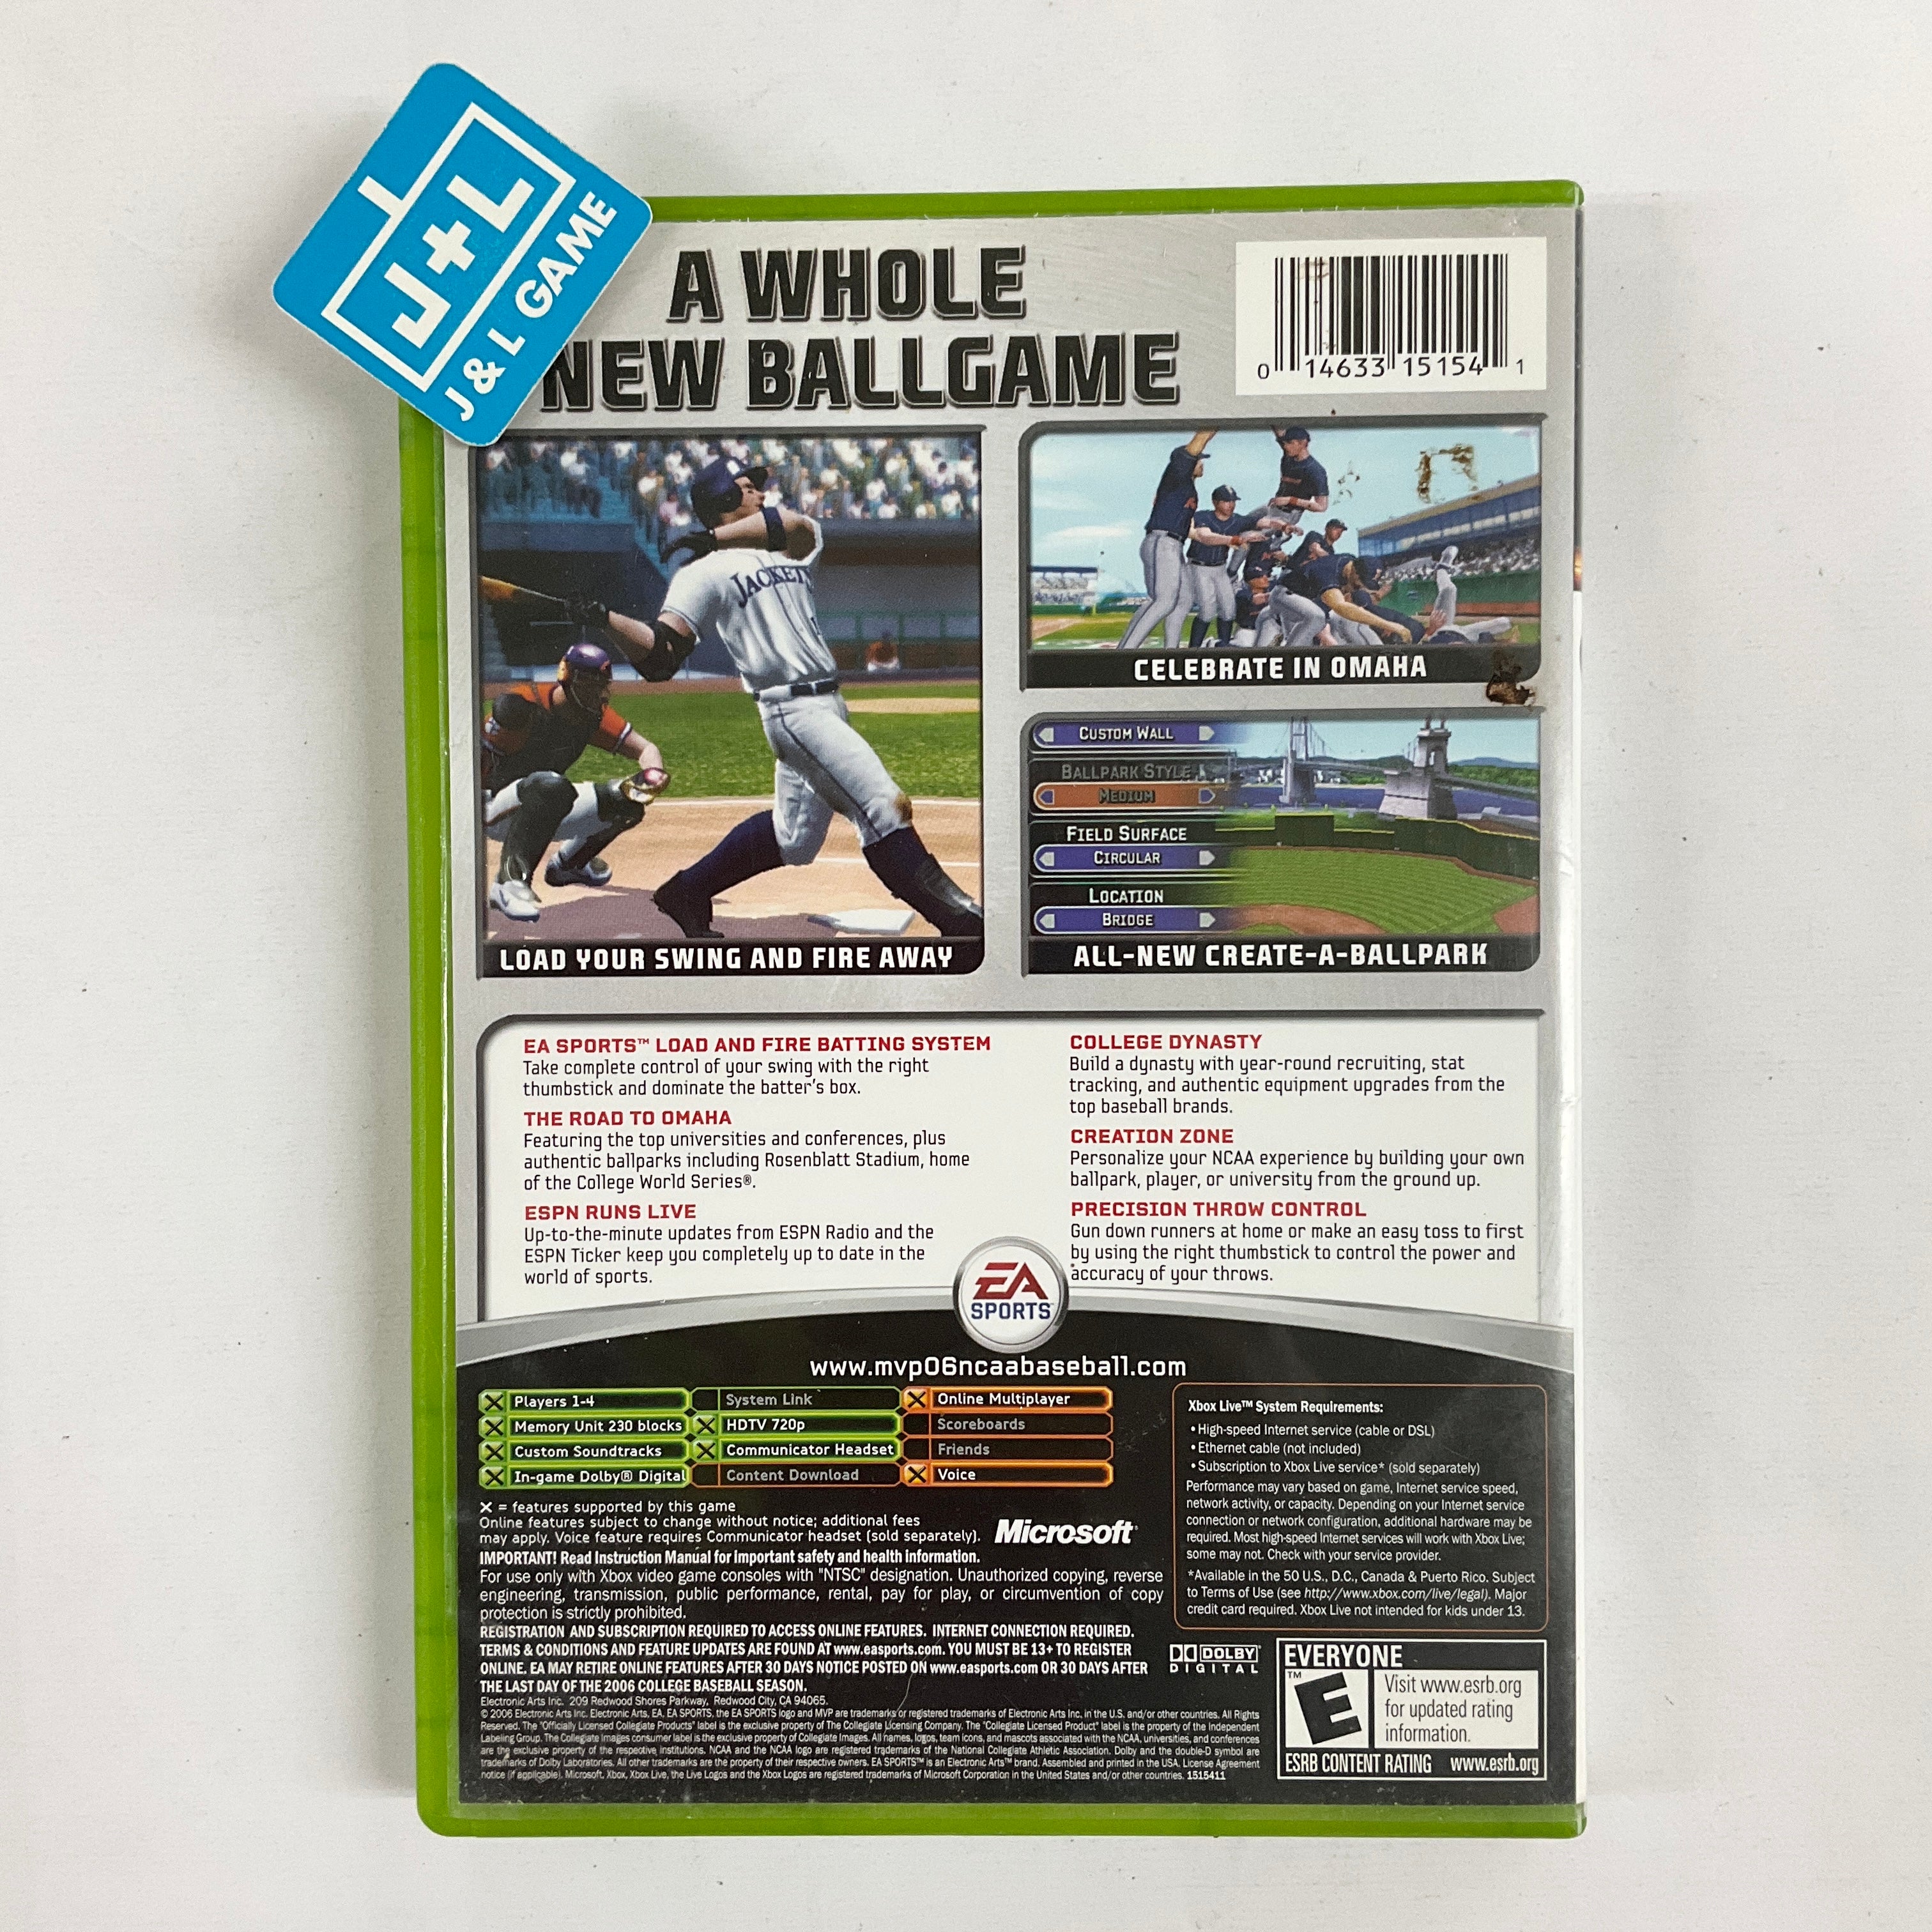 MVP NCAA Baseball 06- (XB) Xbox [Pre-Owned] Video Games EA Sports   